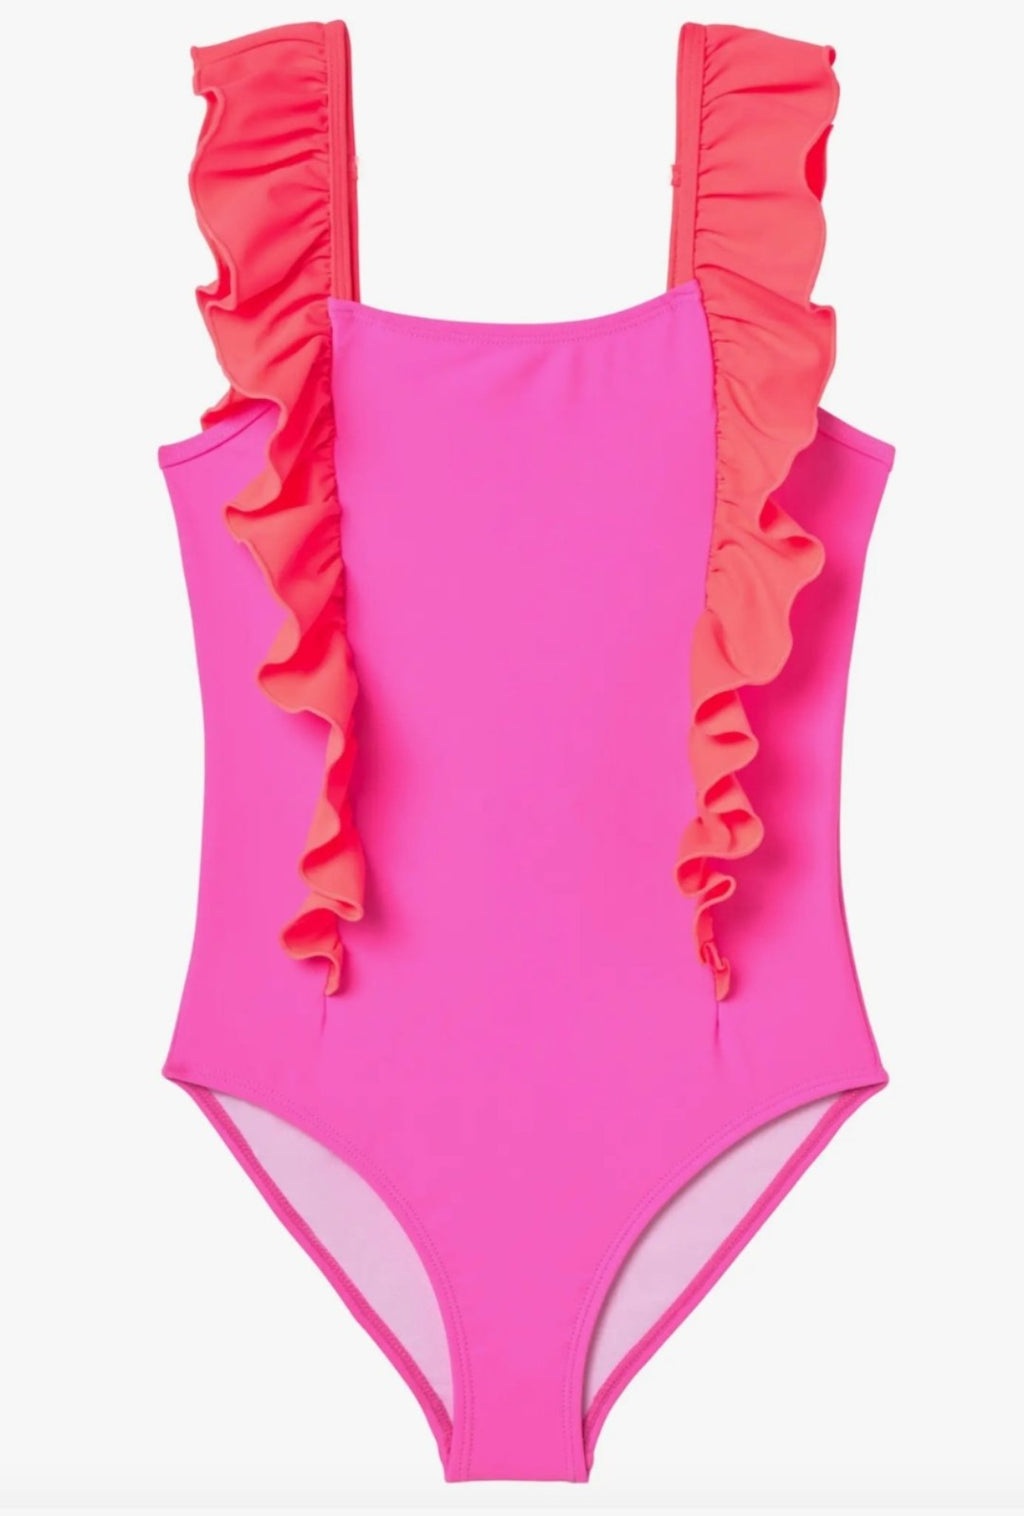 Kids Girls One Piece Ruffle Monokini Beachwear Swimsuits Bathing Suit  Swimwear 